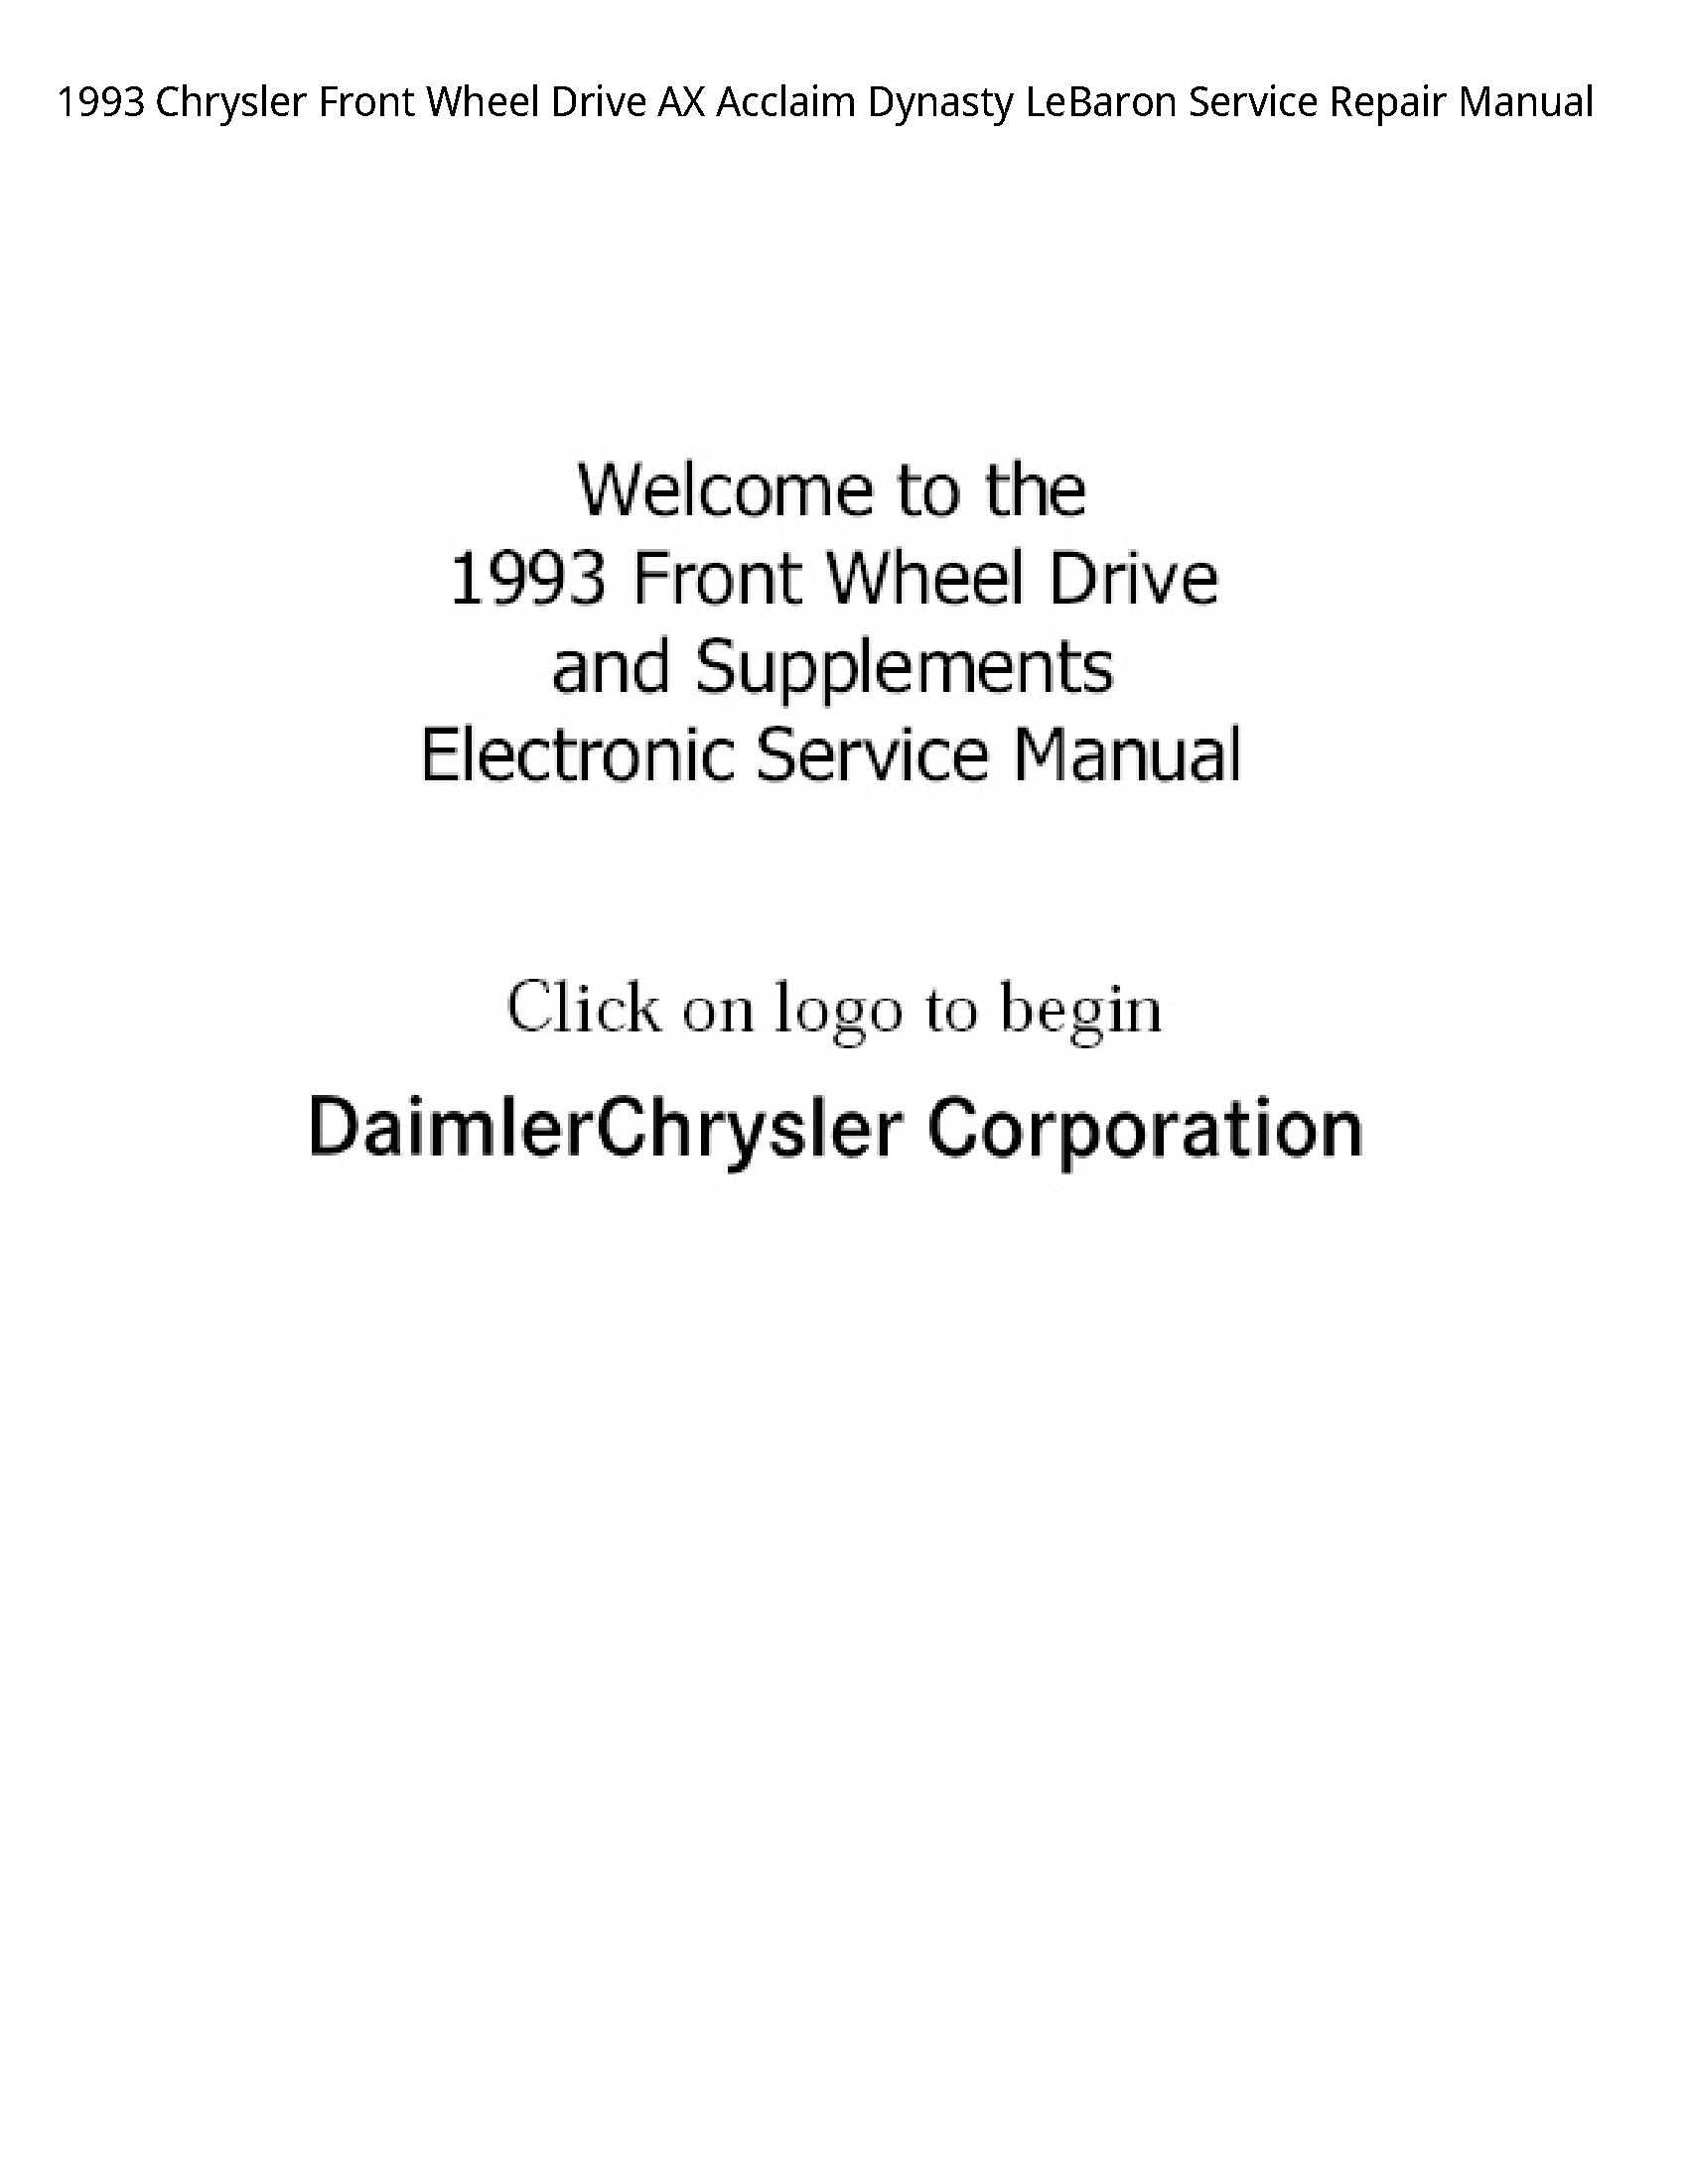 Chrysler Front Wheel Drive AX Acclaim Dynasty LeBaron manual